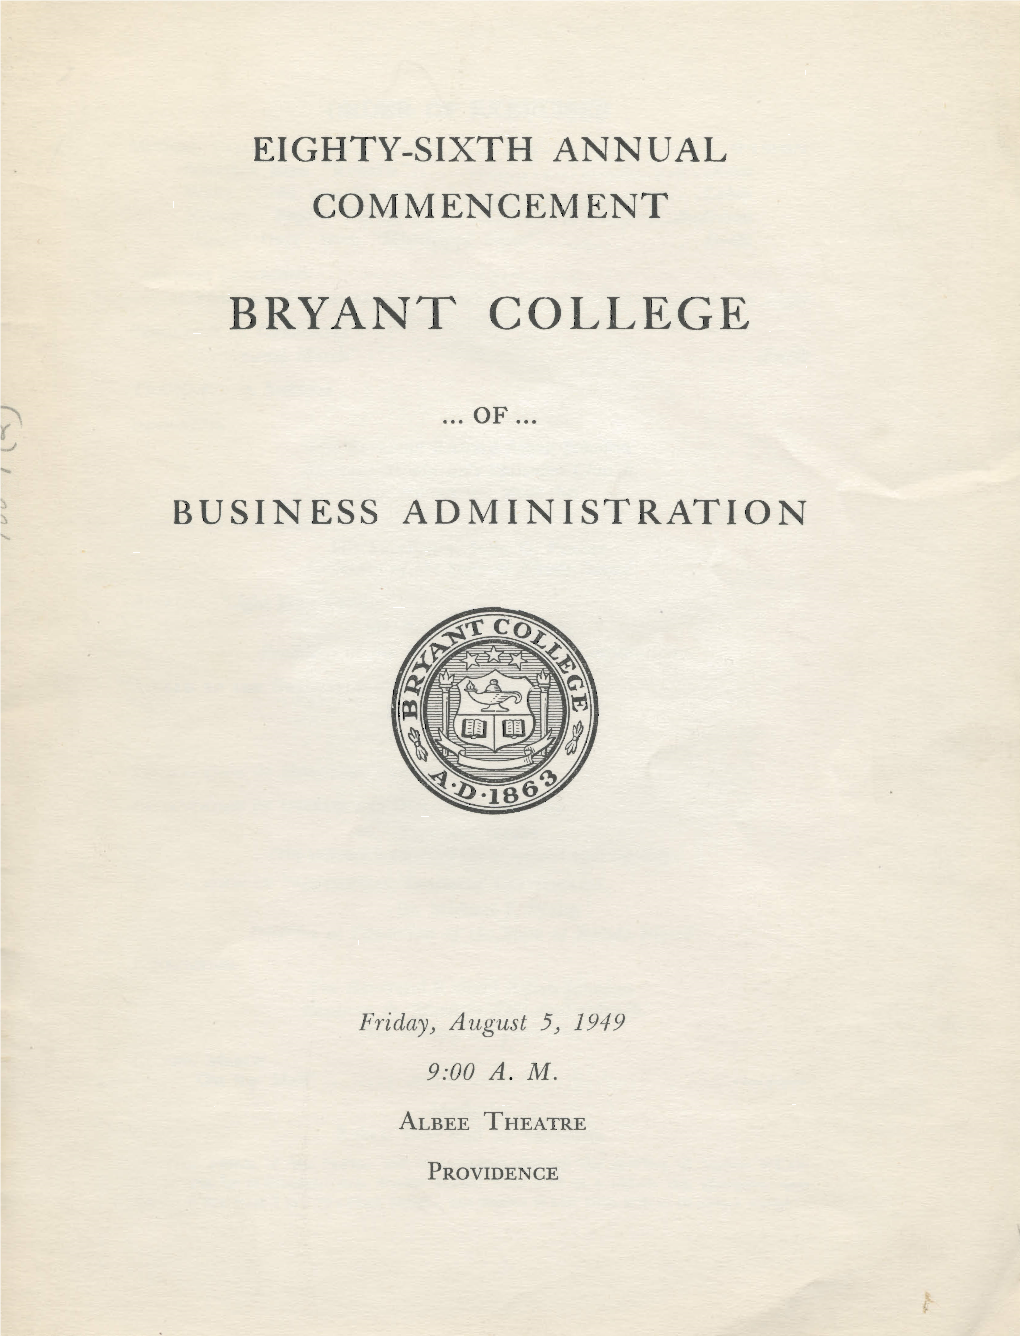 Commencement Exercises Program, August 5, 1949